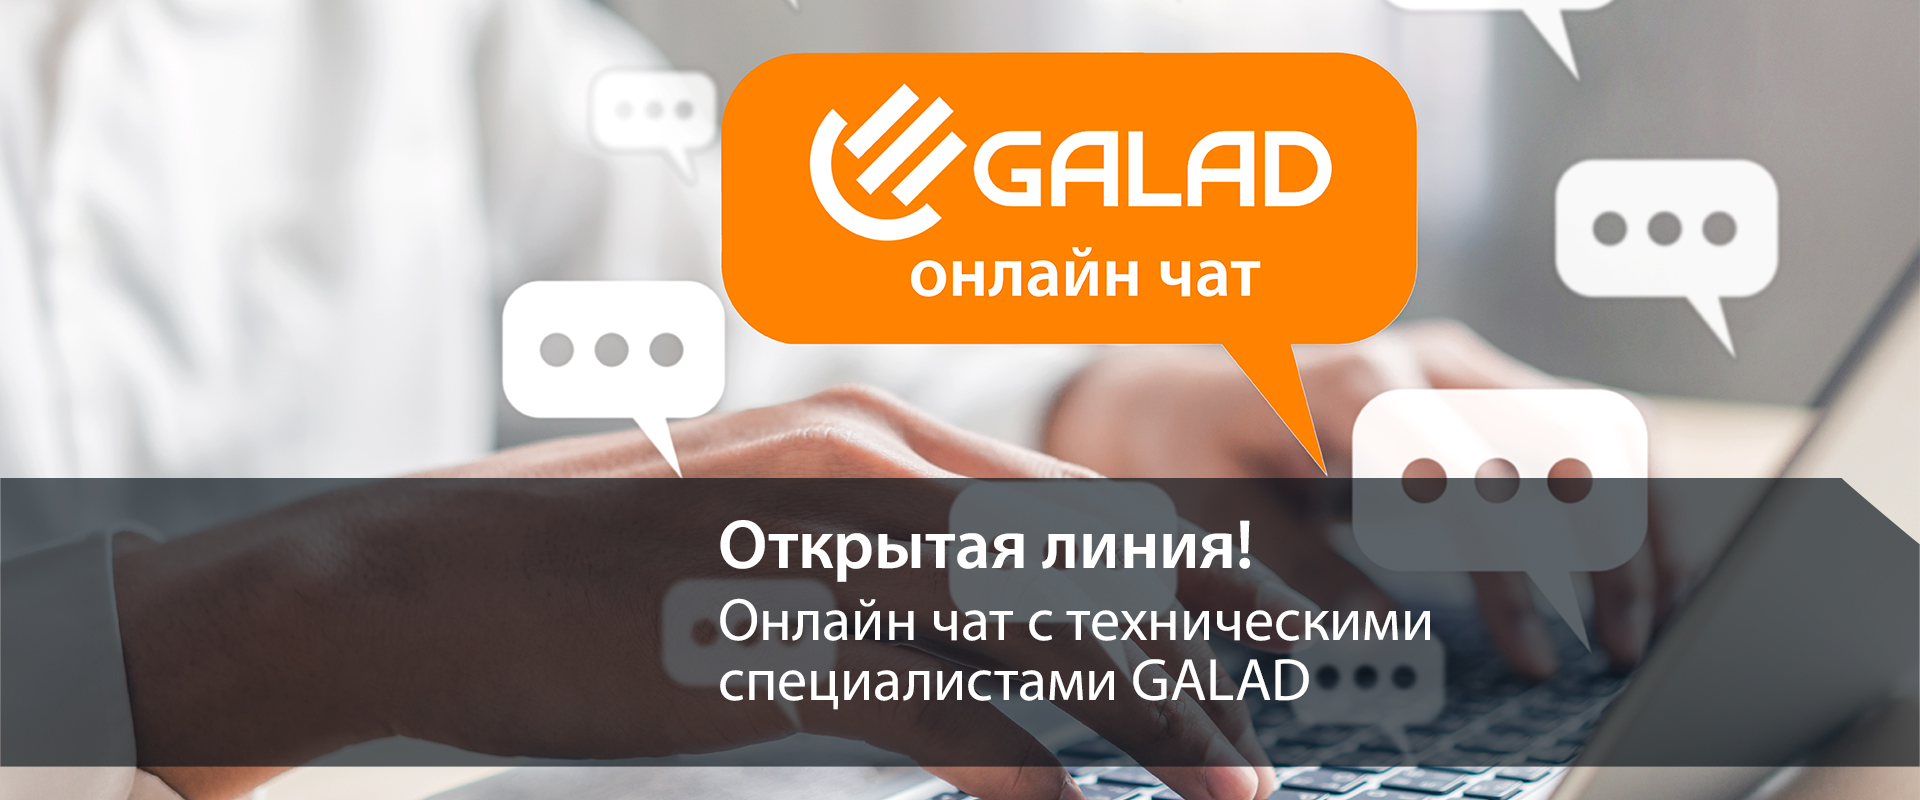 Открытая линия: на сайте GALAD появился онлайн-чат с техподдержкой!